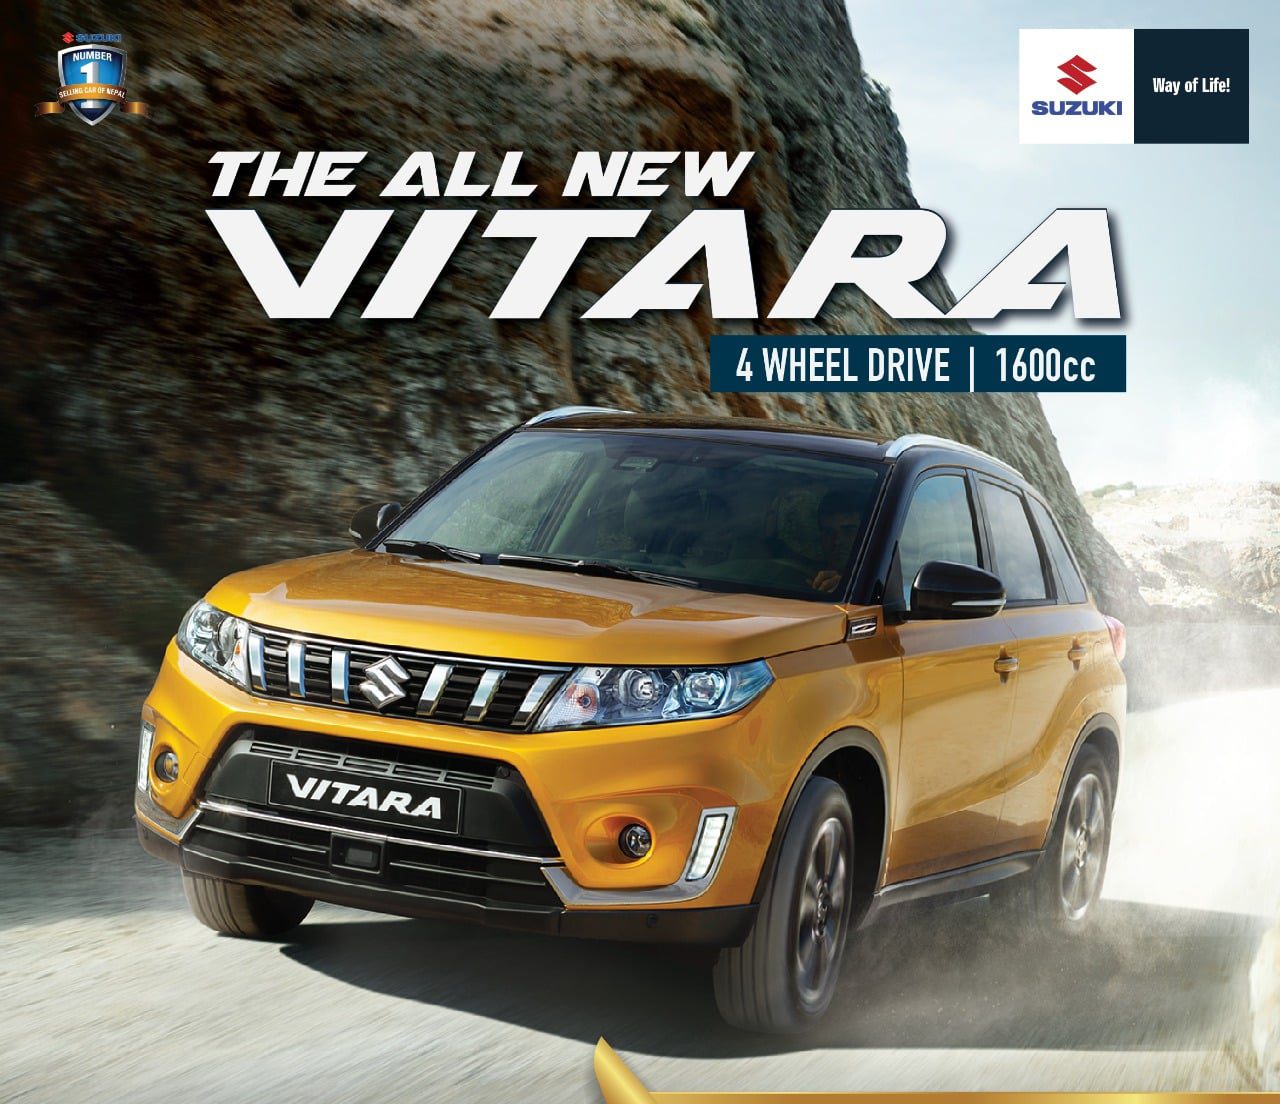 Suzuki Vitara Bookings Open in Nepal